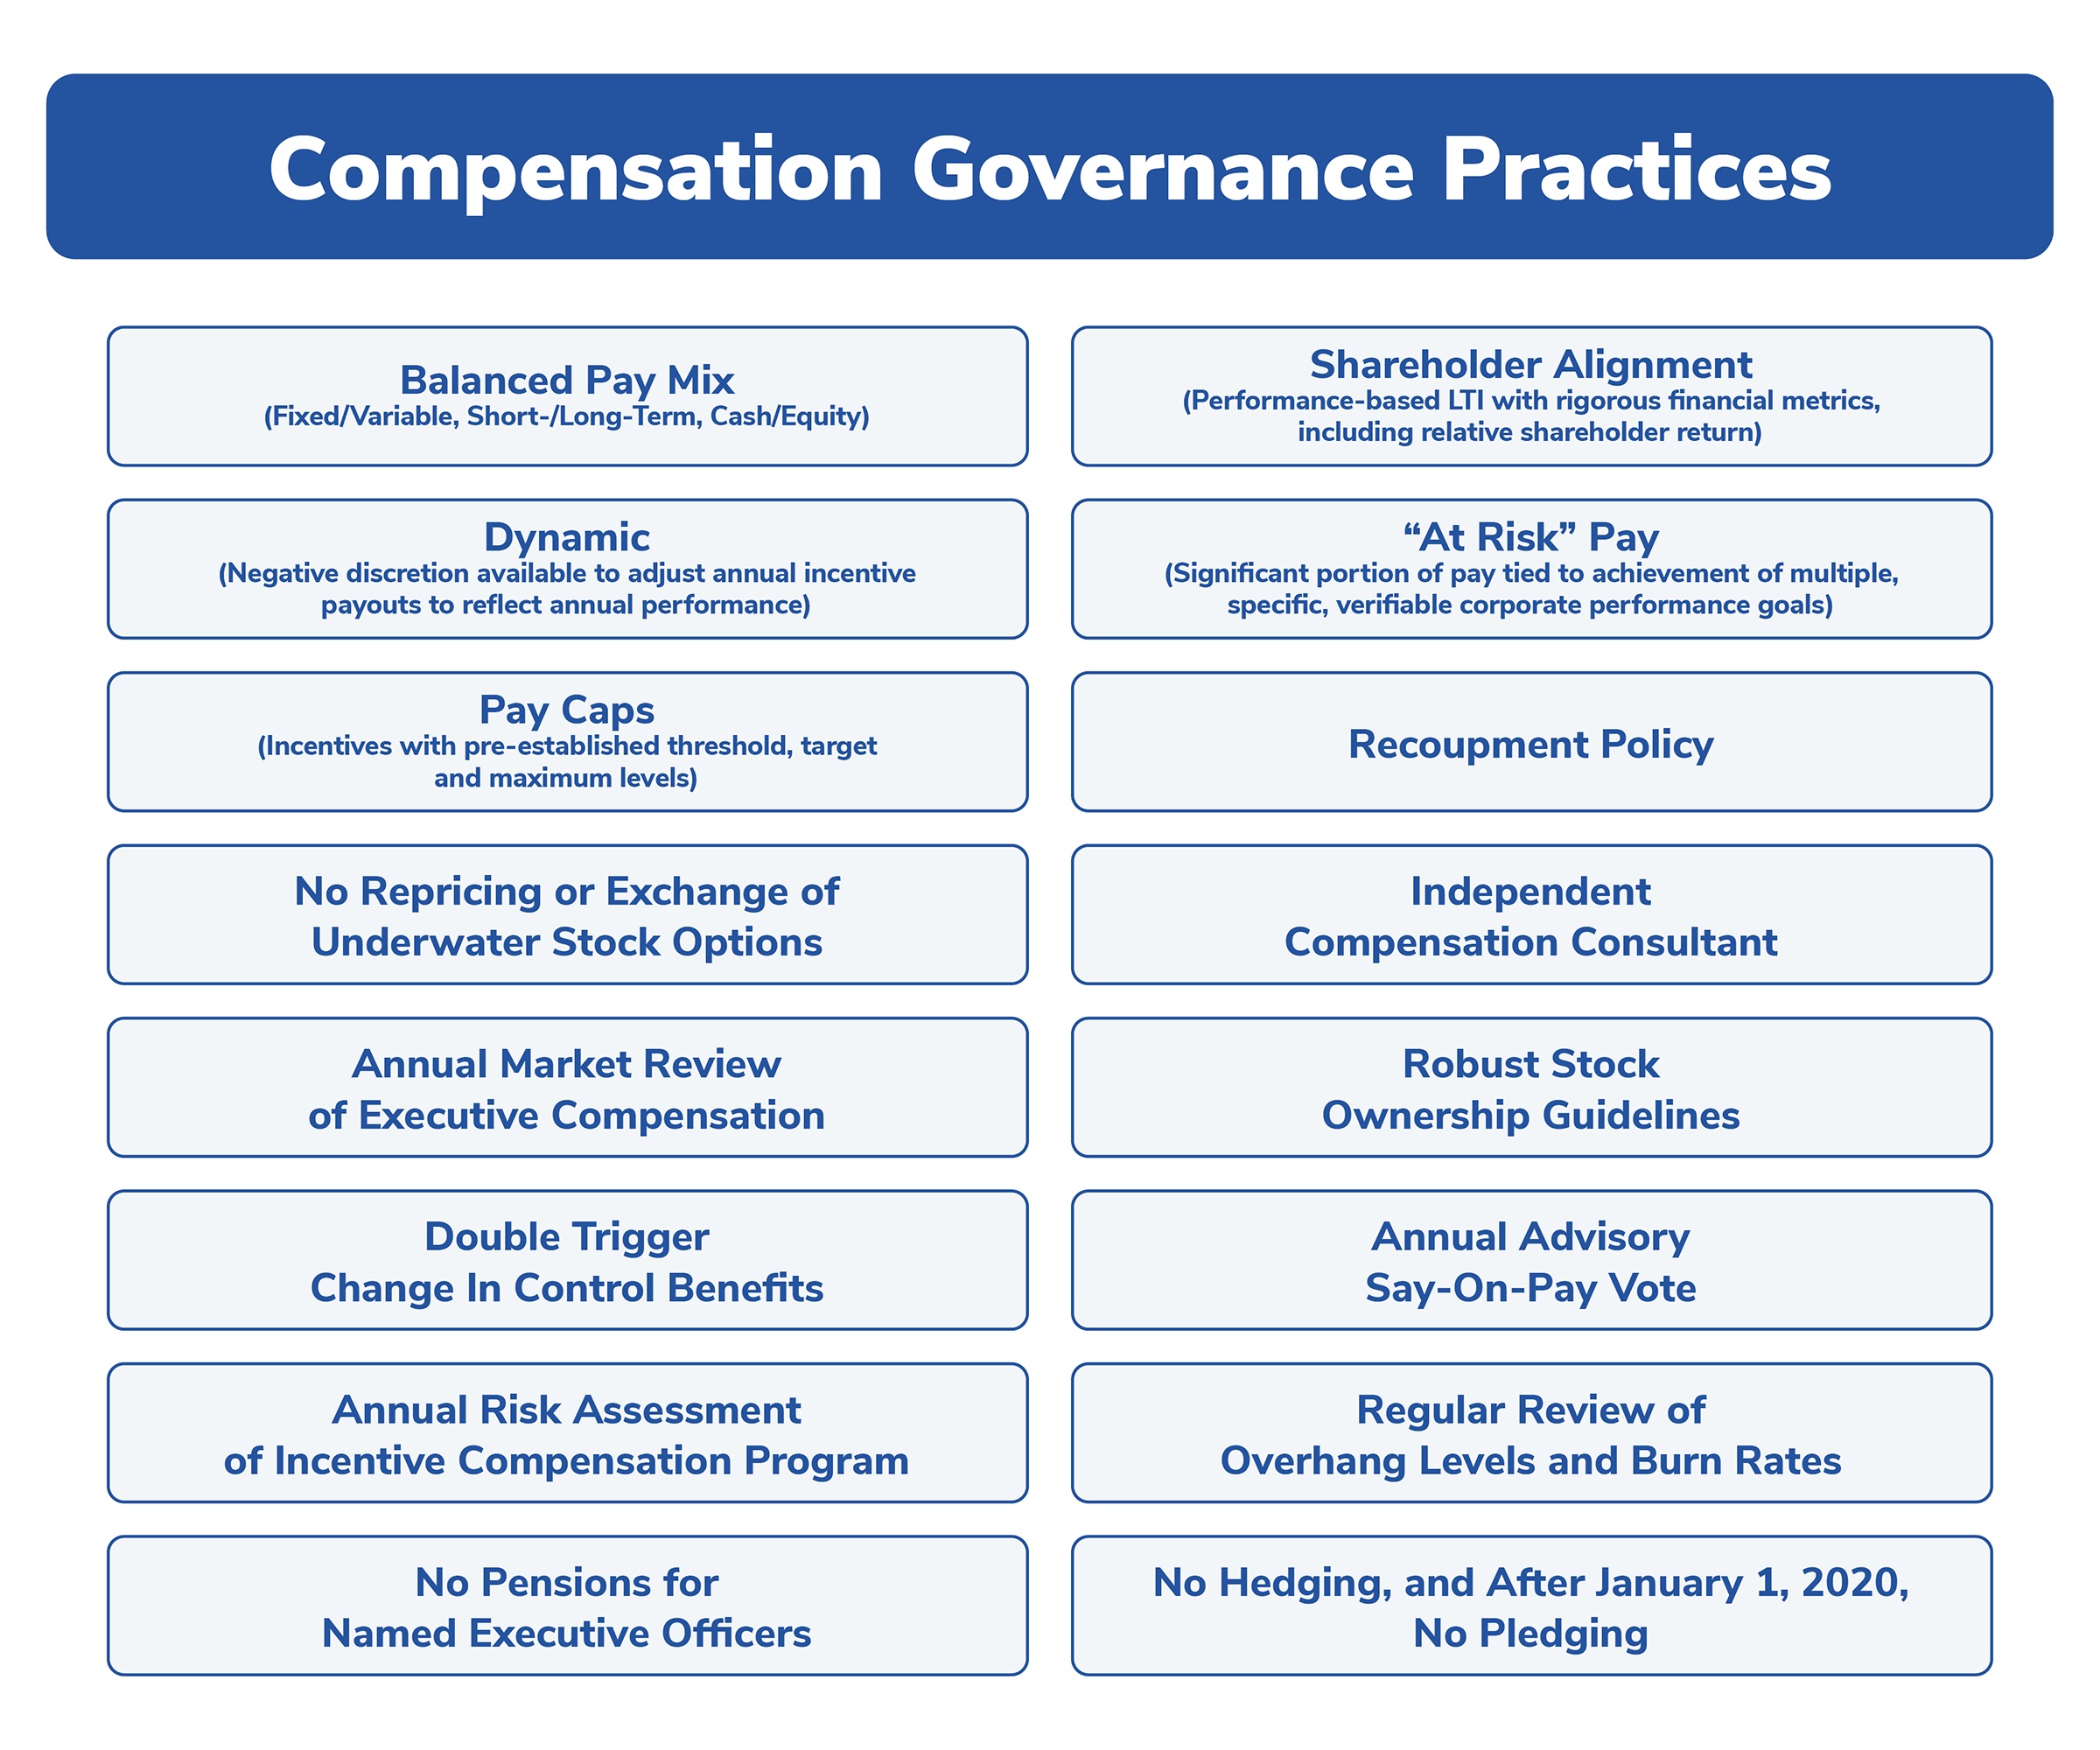 compensationgovernanceprac.jpg